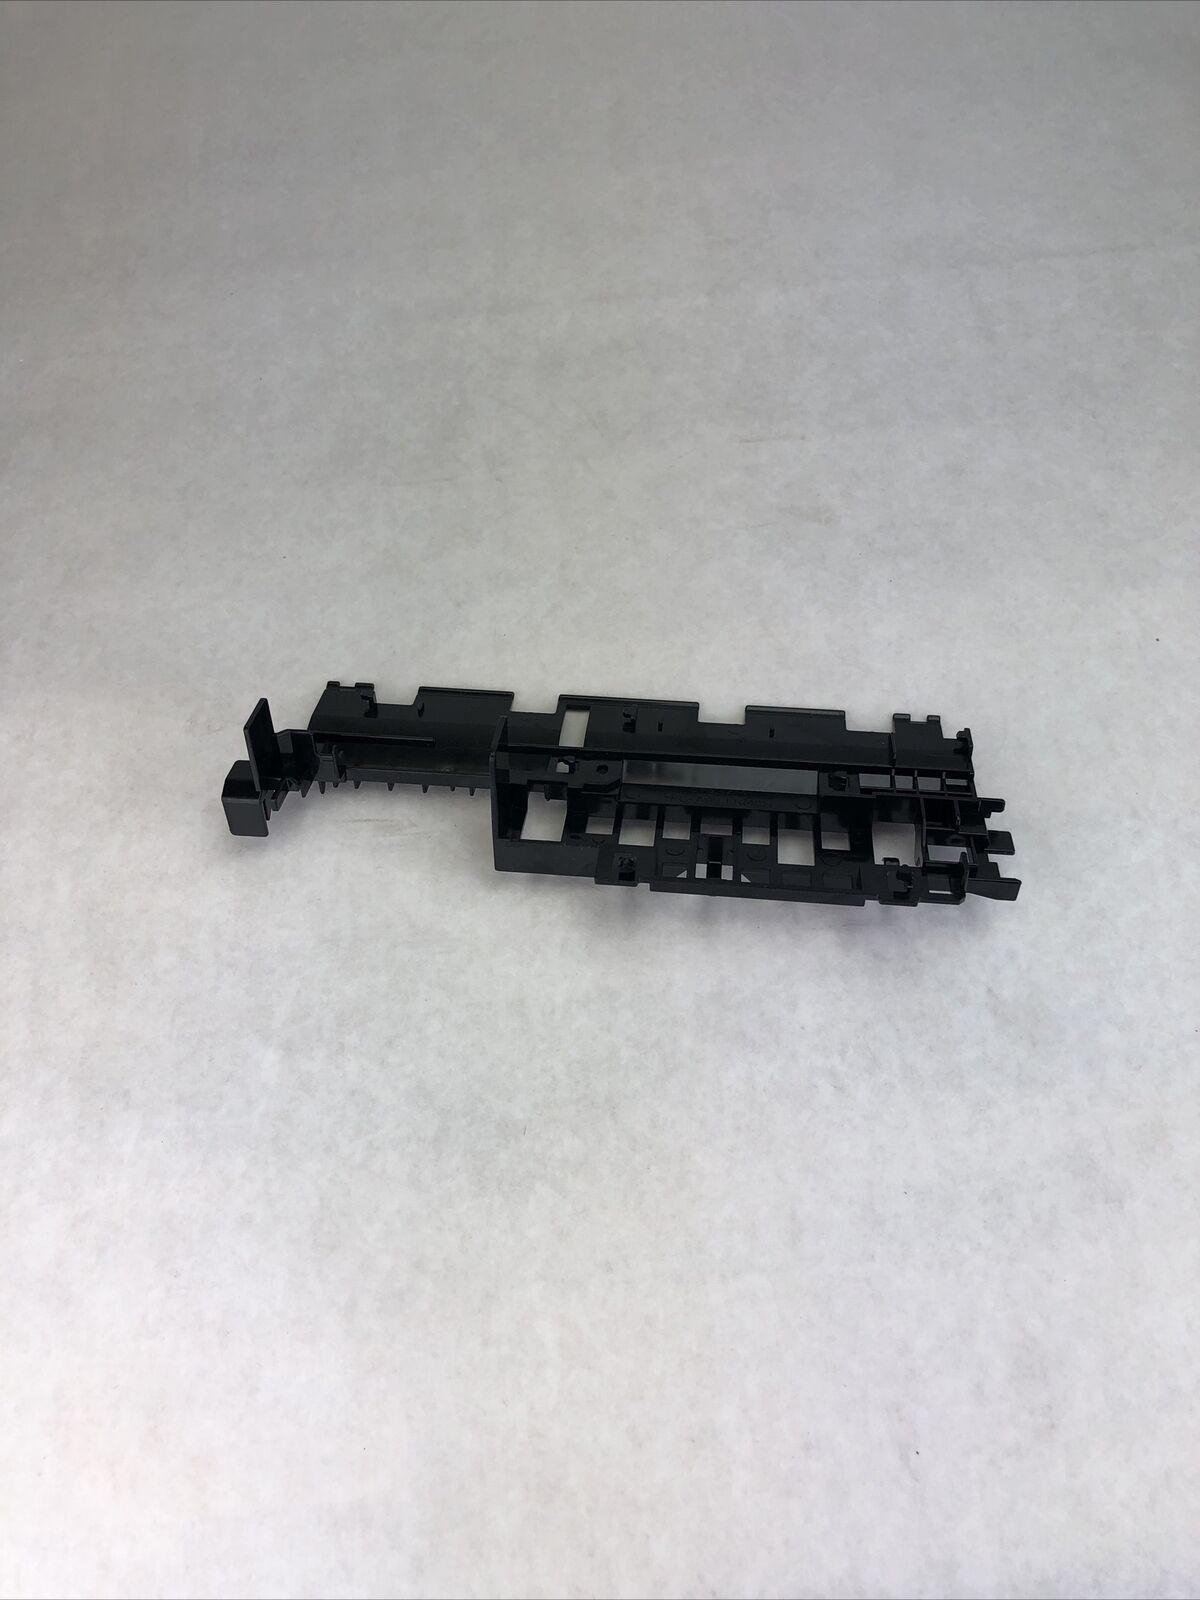 HP LaserJet Pro 400 M401ne Printer Parts RC3-2503